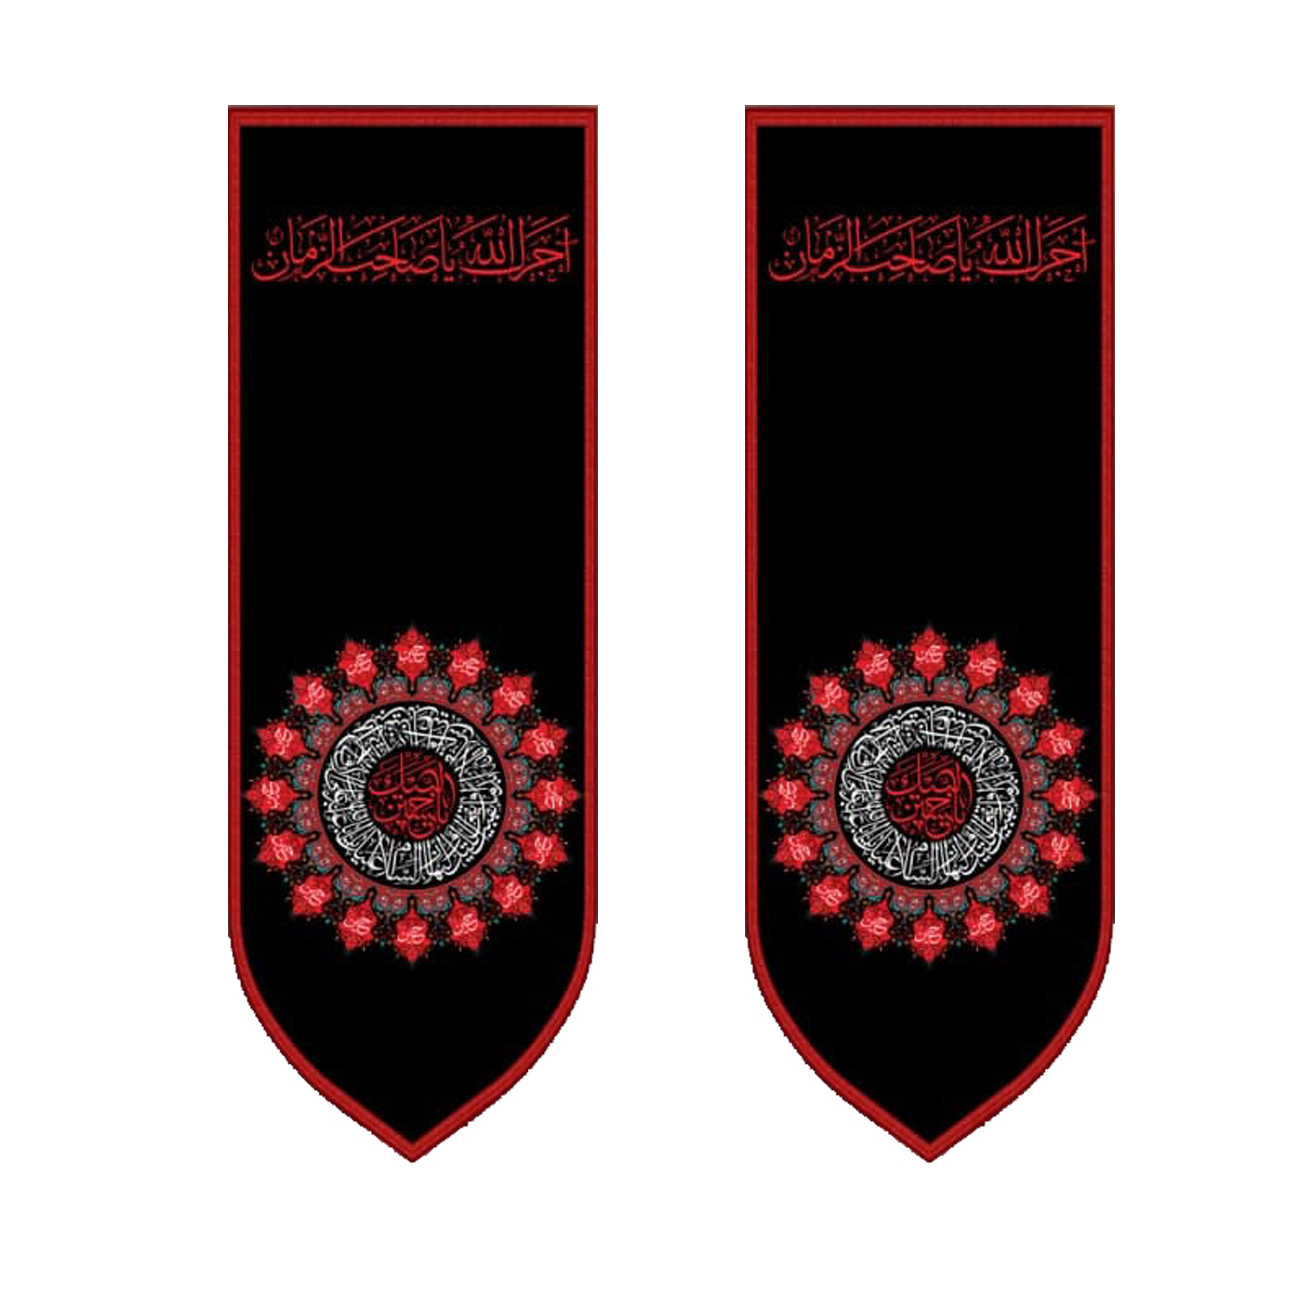 پرچم مدل آجرک الله یا صاحب الزمان کد 50001611-20070 بسته 2 عددی